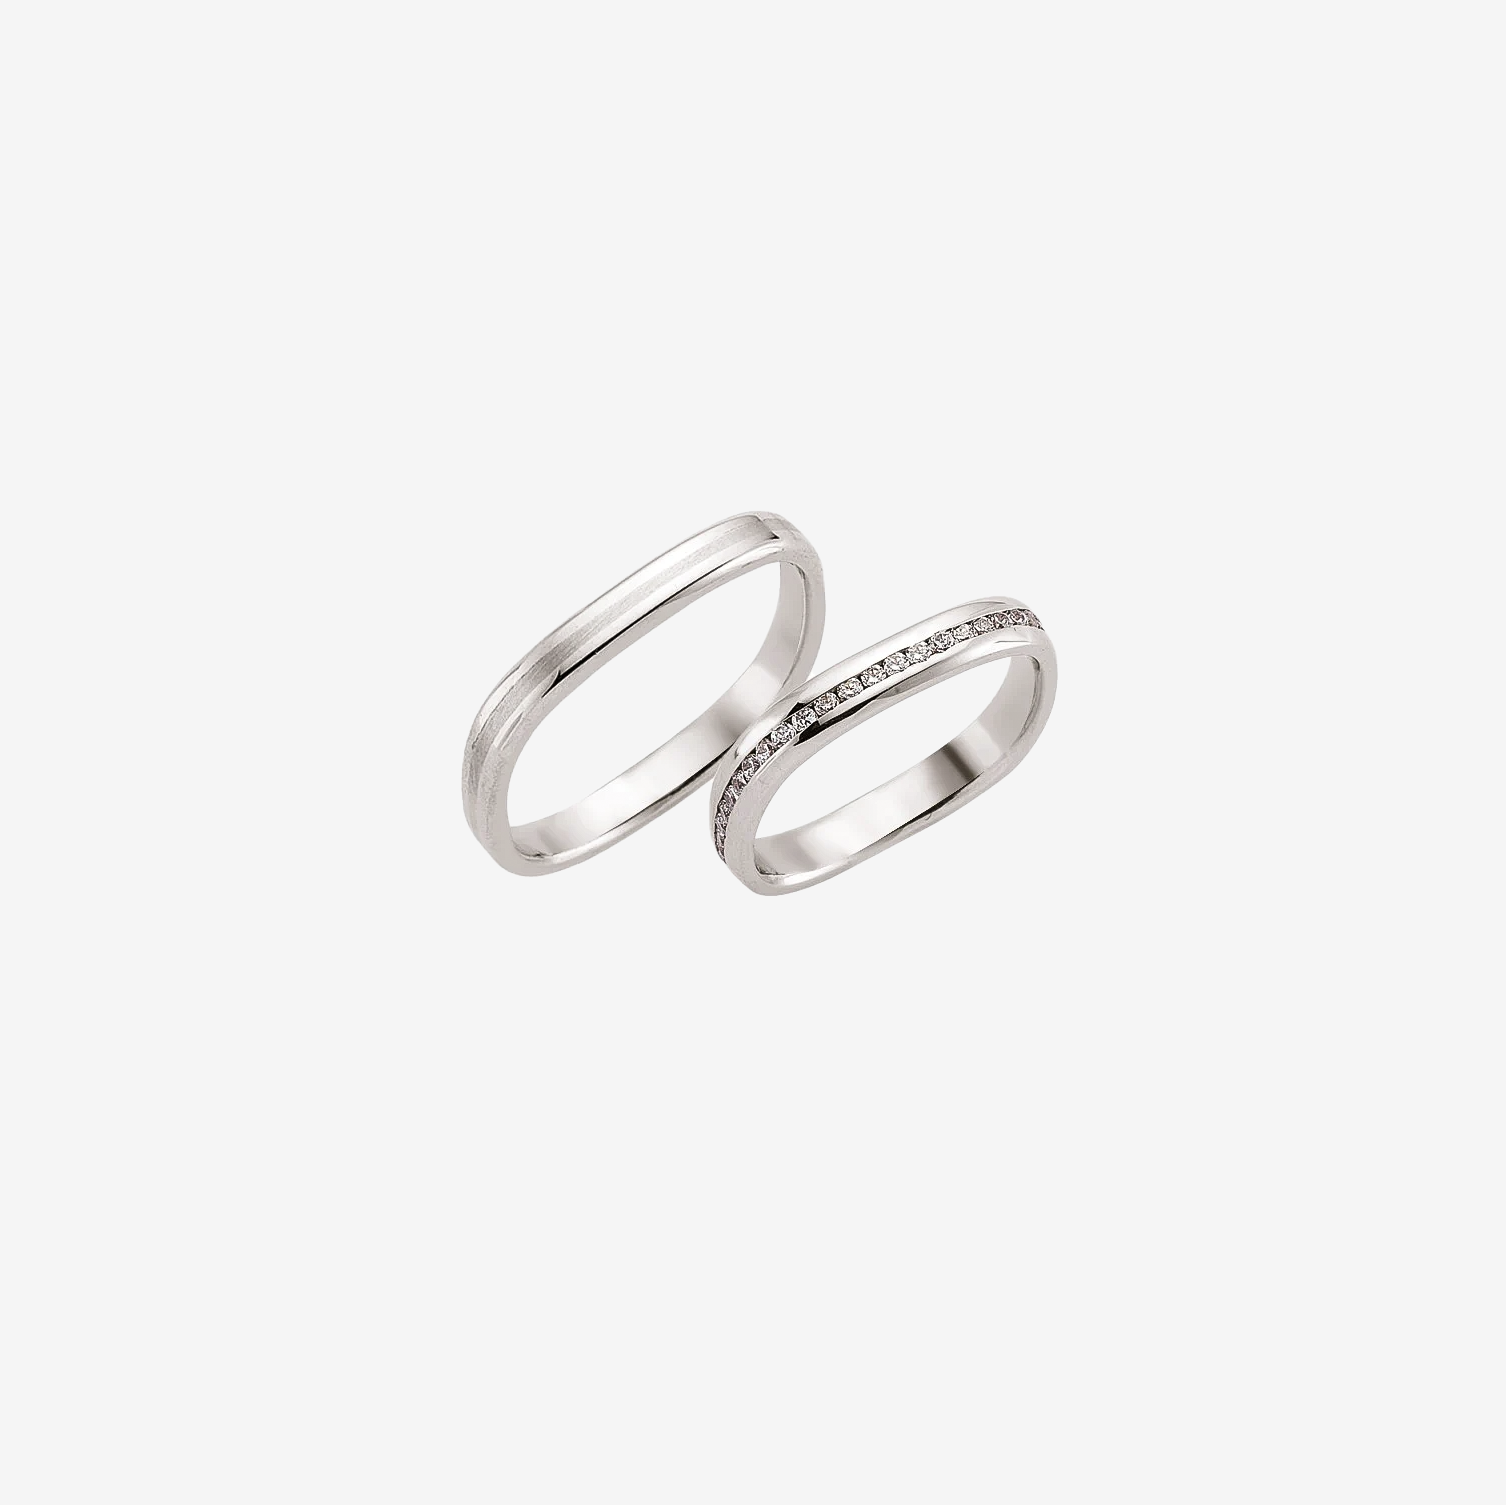 Tiara Diamond Wedding Rings - White Gold - Pair